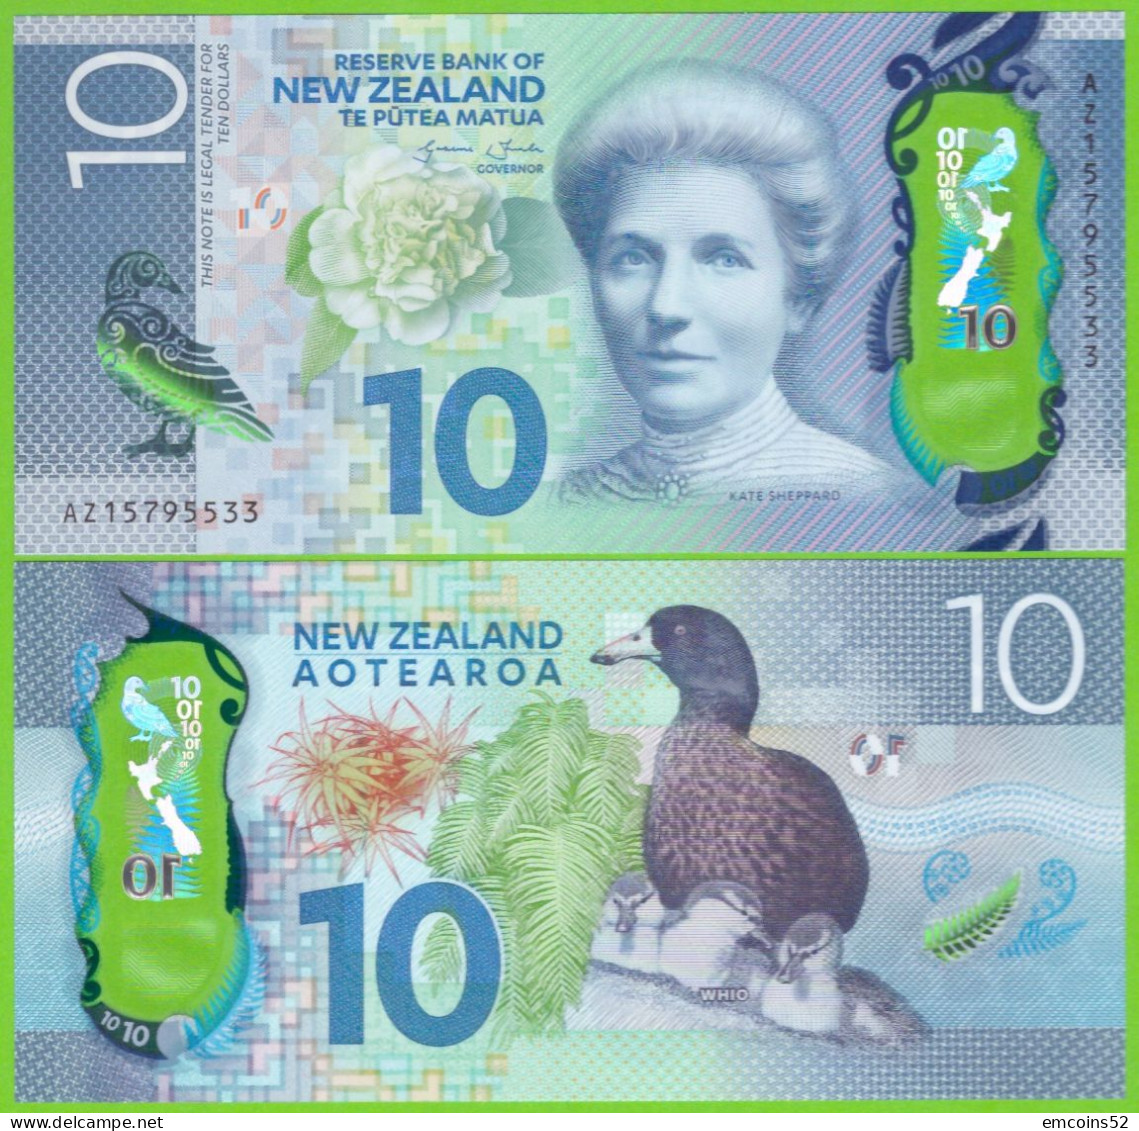 NEW ZEALAND 10 DOLLARS 2015  P-192  UNC - Neuseeland